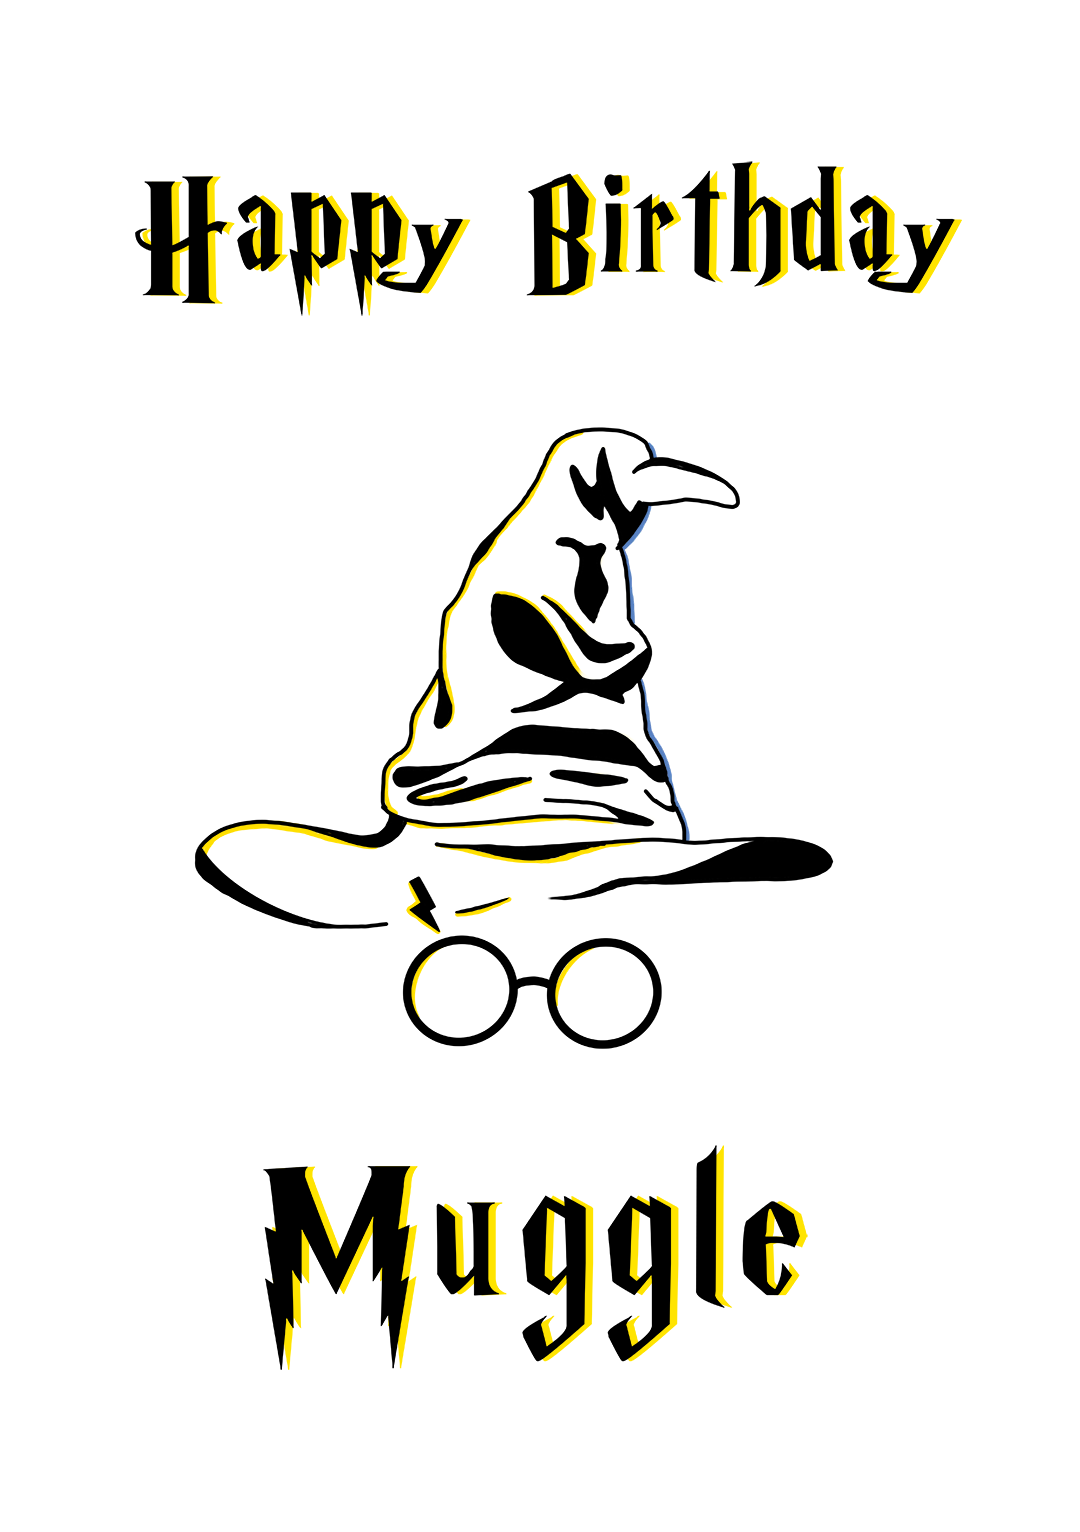 Happy Birthday Muggle Card